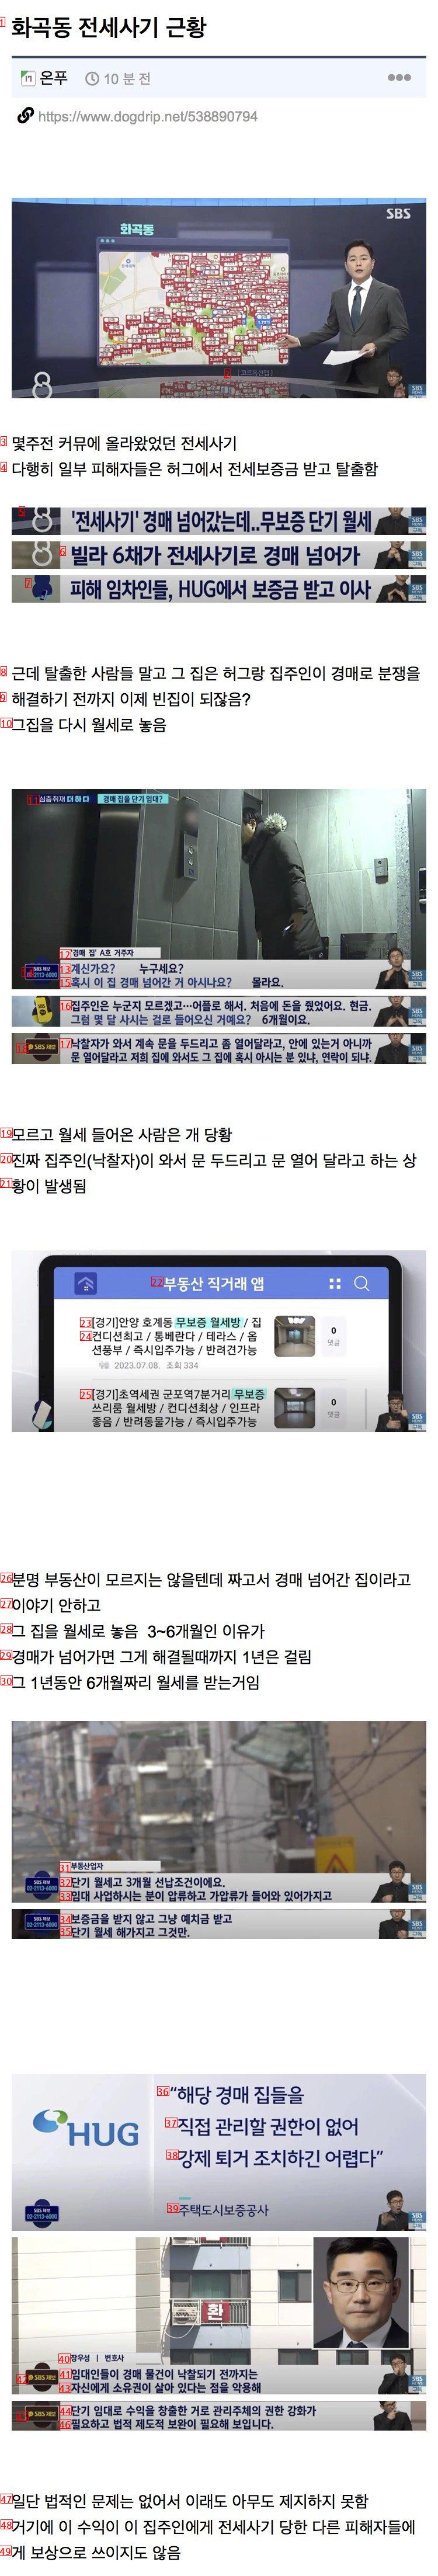 Hwagok-dong charterage shock update ㄷㄷ